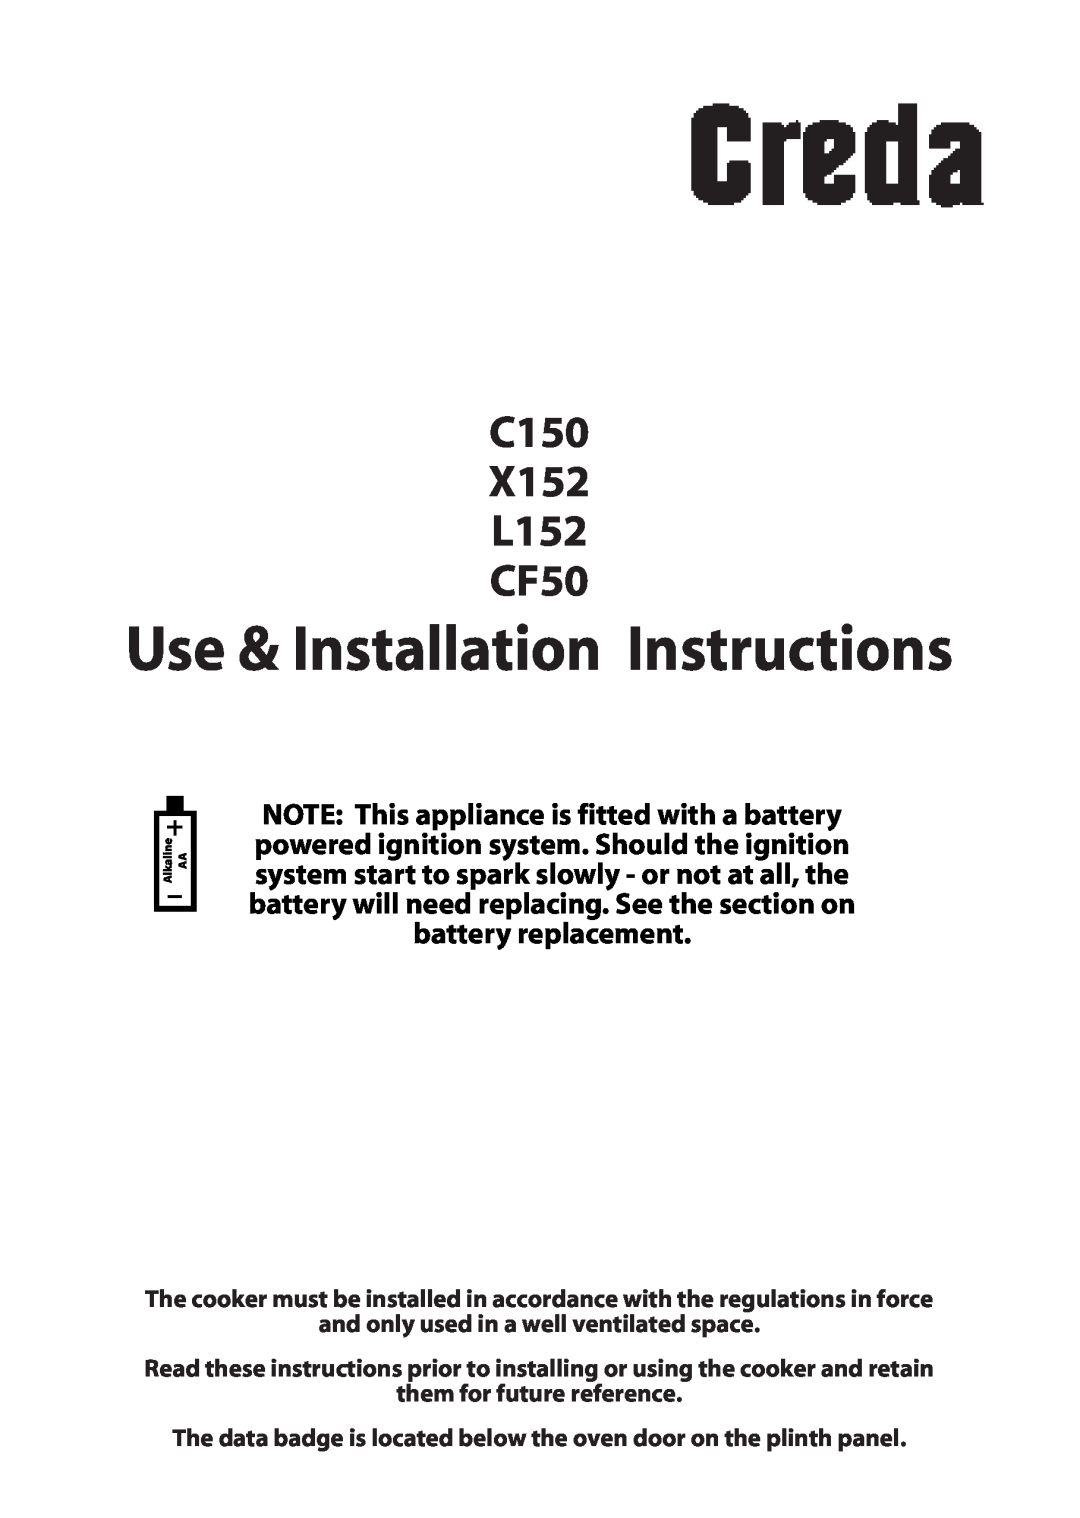 Creda installation instructions Use & Installation Instructions, C150 X152 L152 CF50 